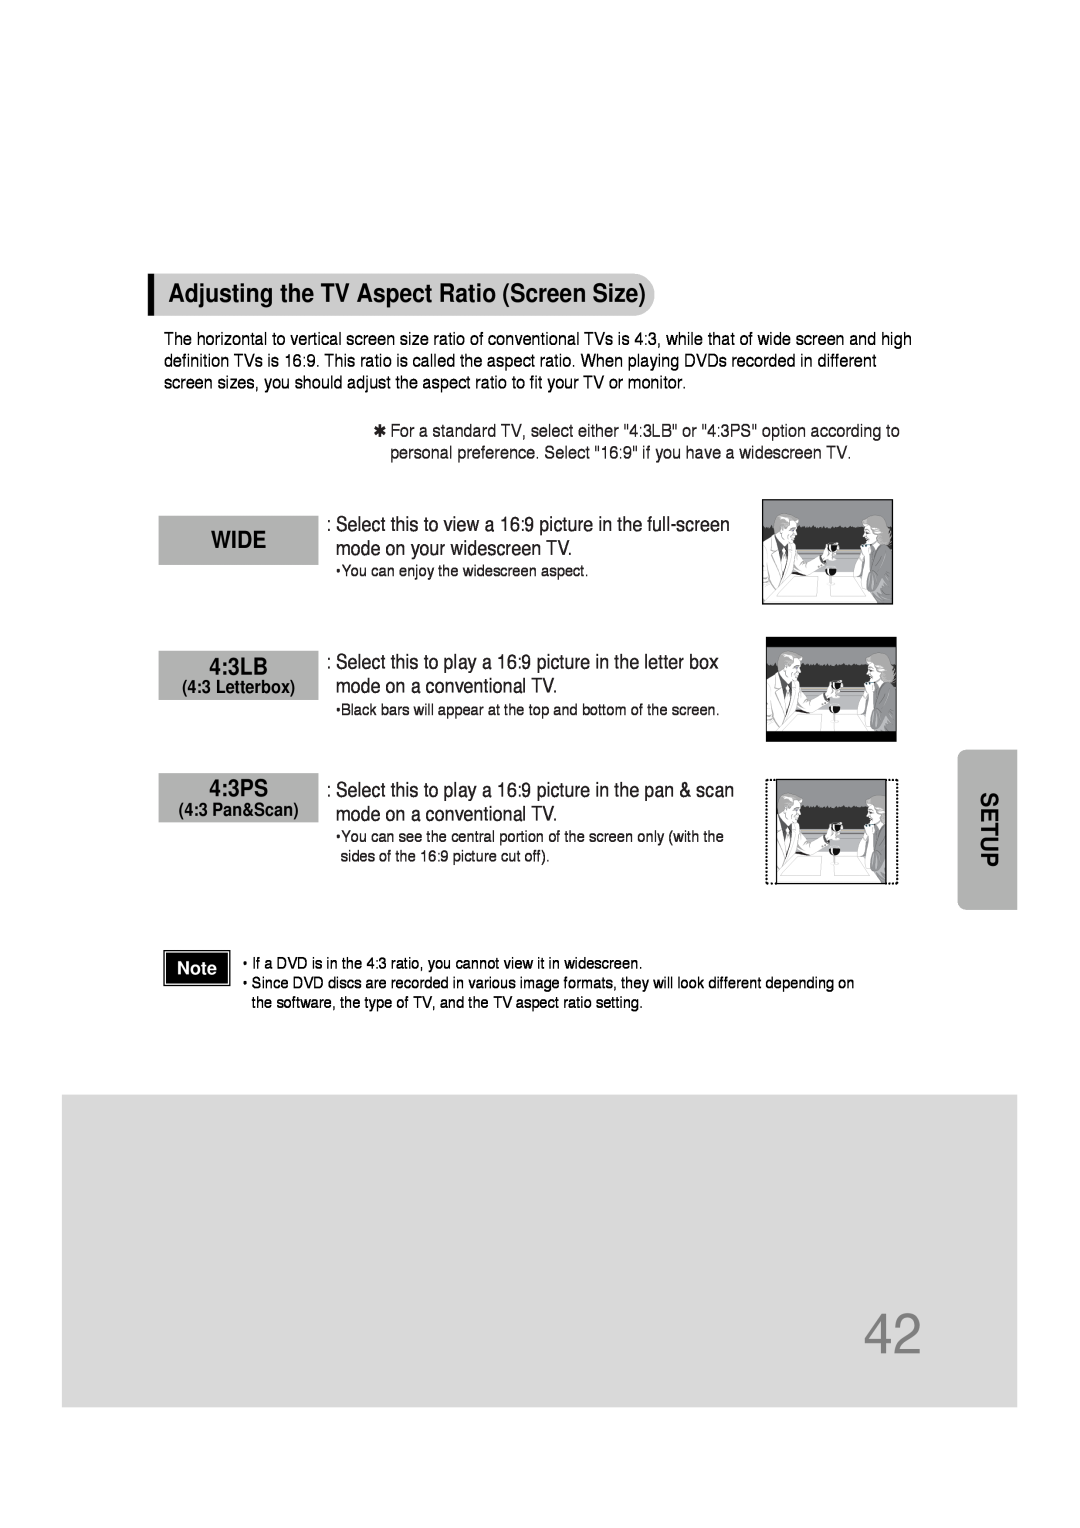 Samsung 20051111103302296 instruction manual Adjusting the TV Aspect Ratio Screen Size, WIDE 4:3LB, 4:3PS, Setup 